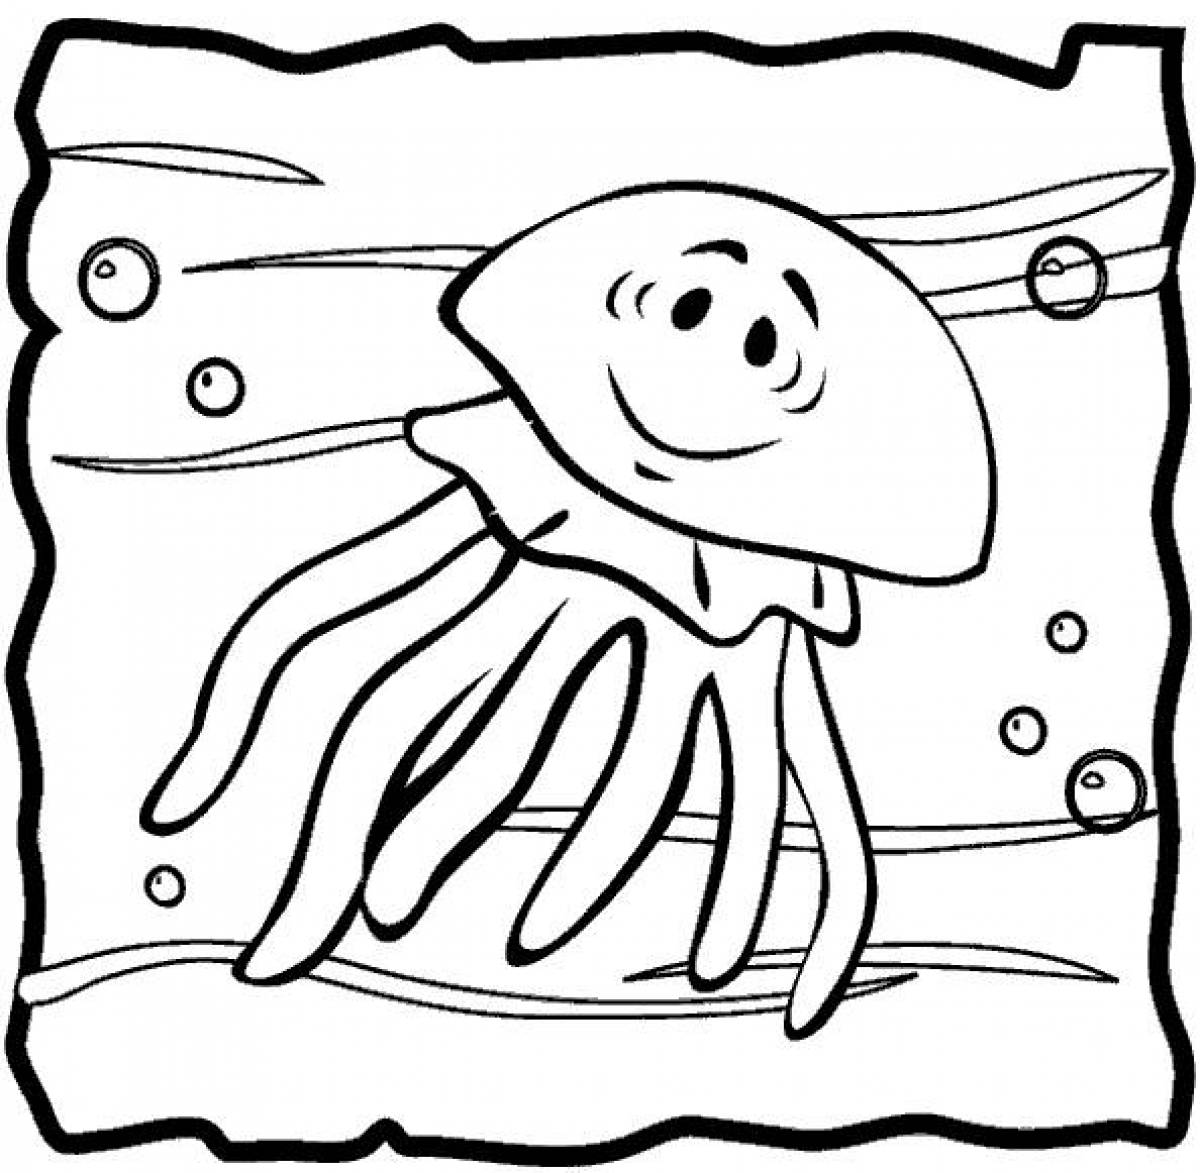 Jellyfish smile